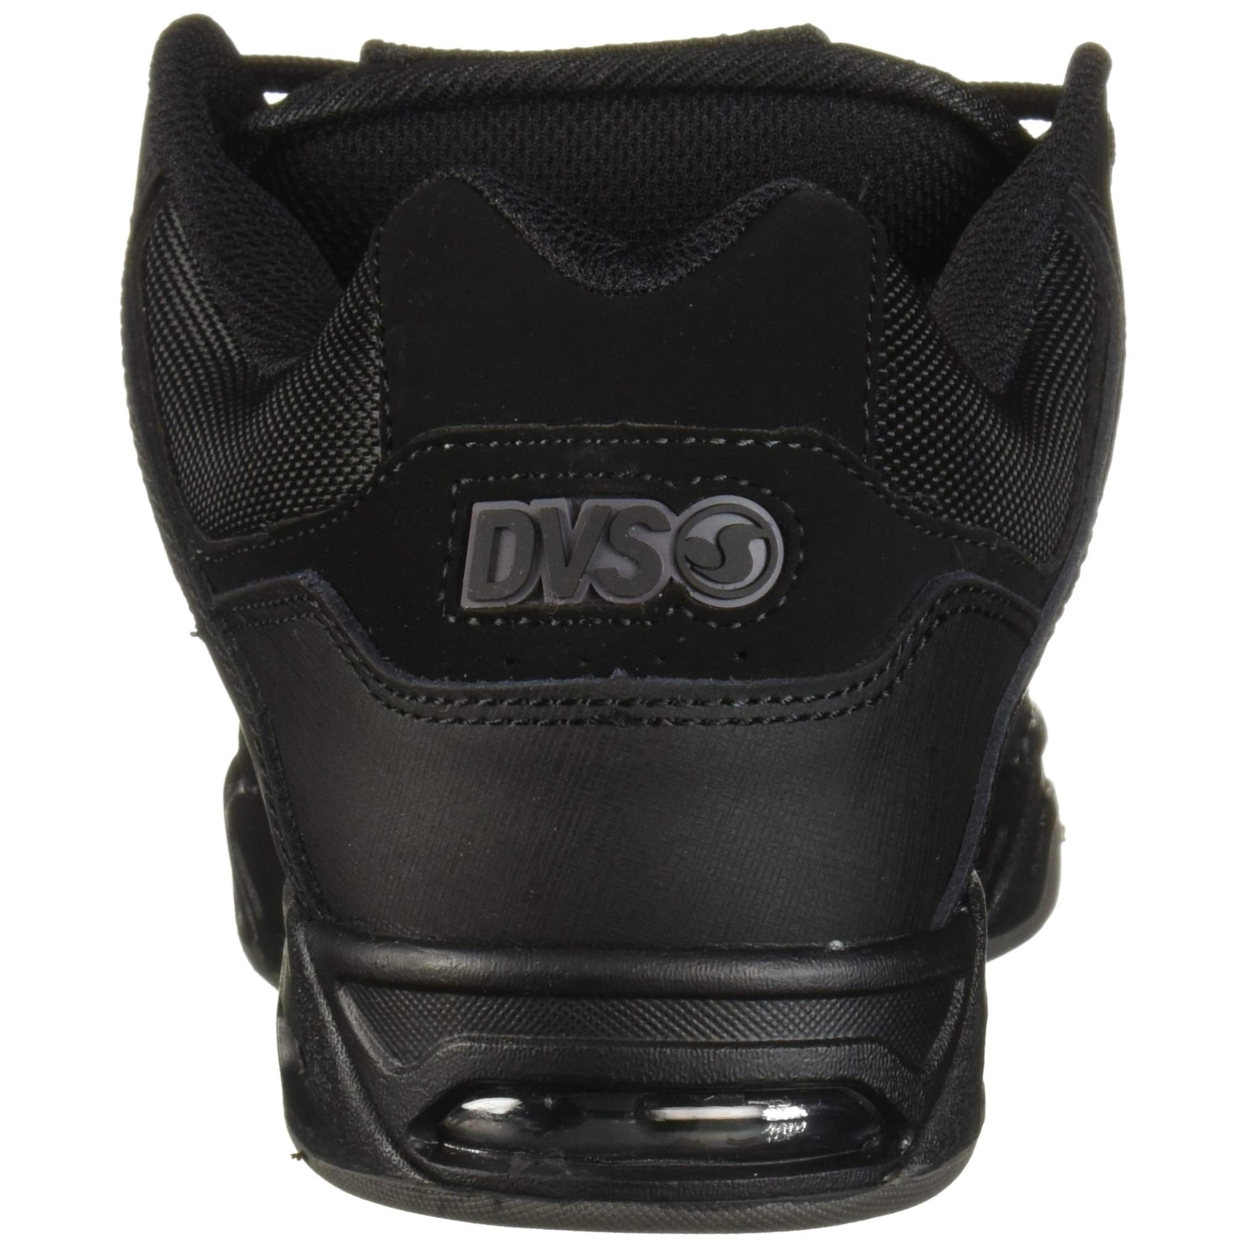 Dvs Footwear Mens Men's Enduro HEIR Skate Shoe BLACK BLACK NUBUCK - BLACK BLACK NUBUCK, 10.5-M